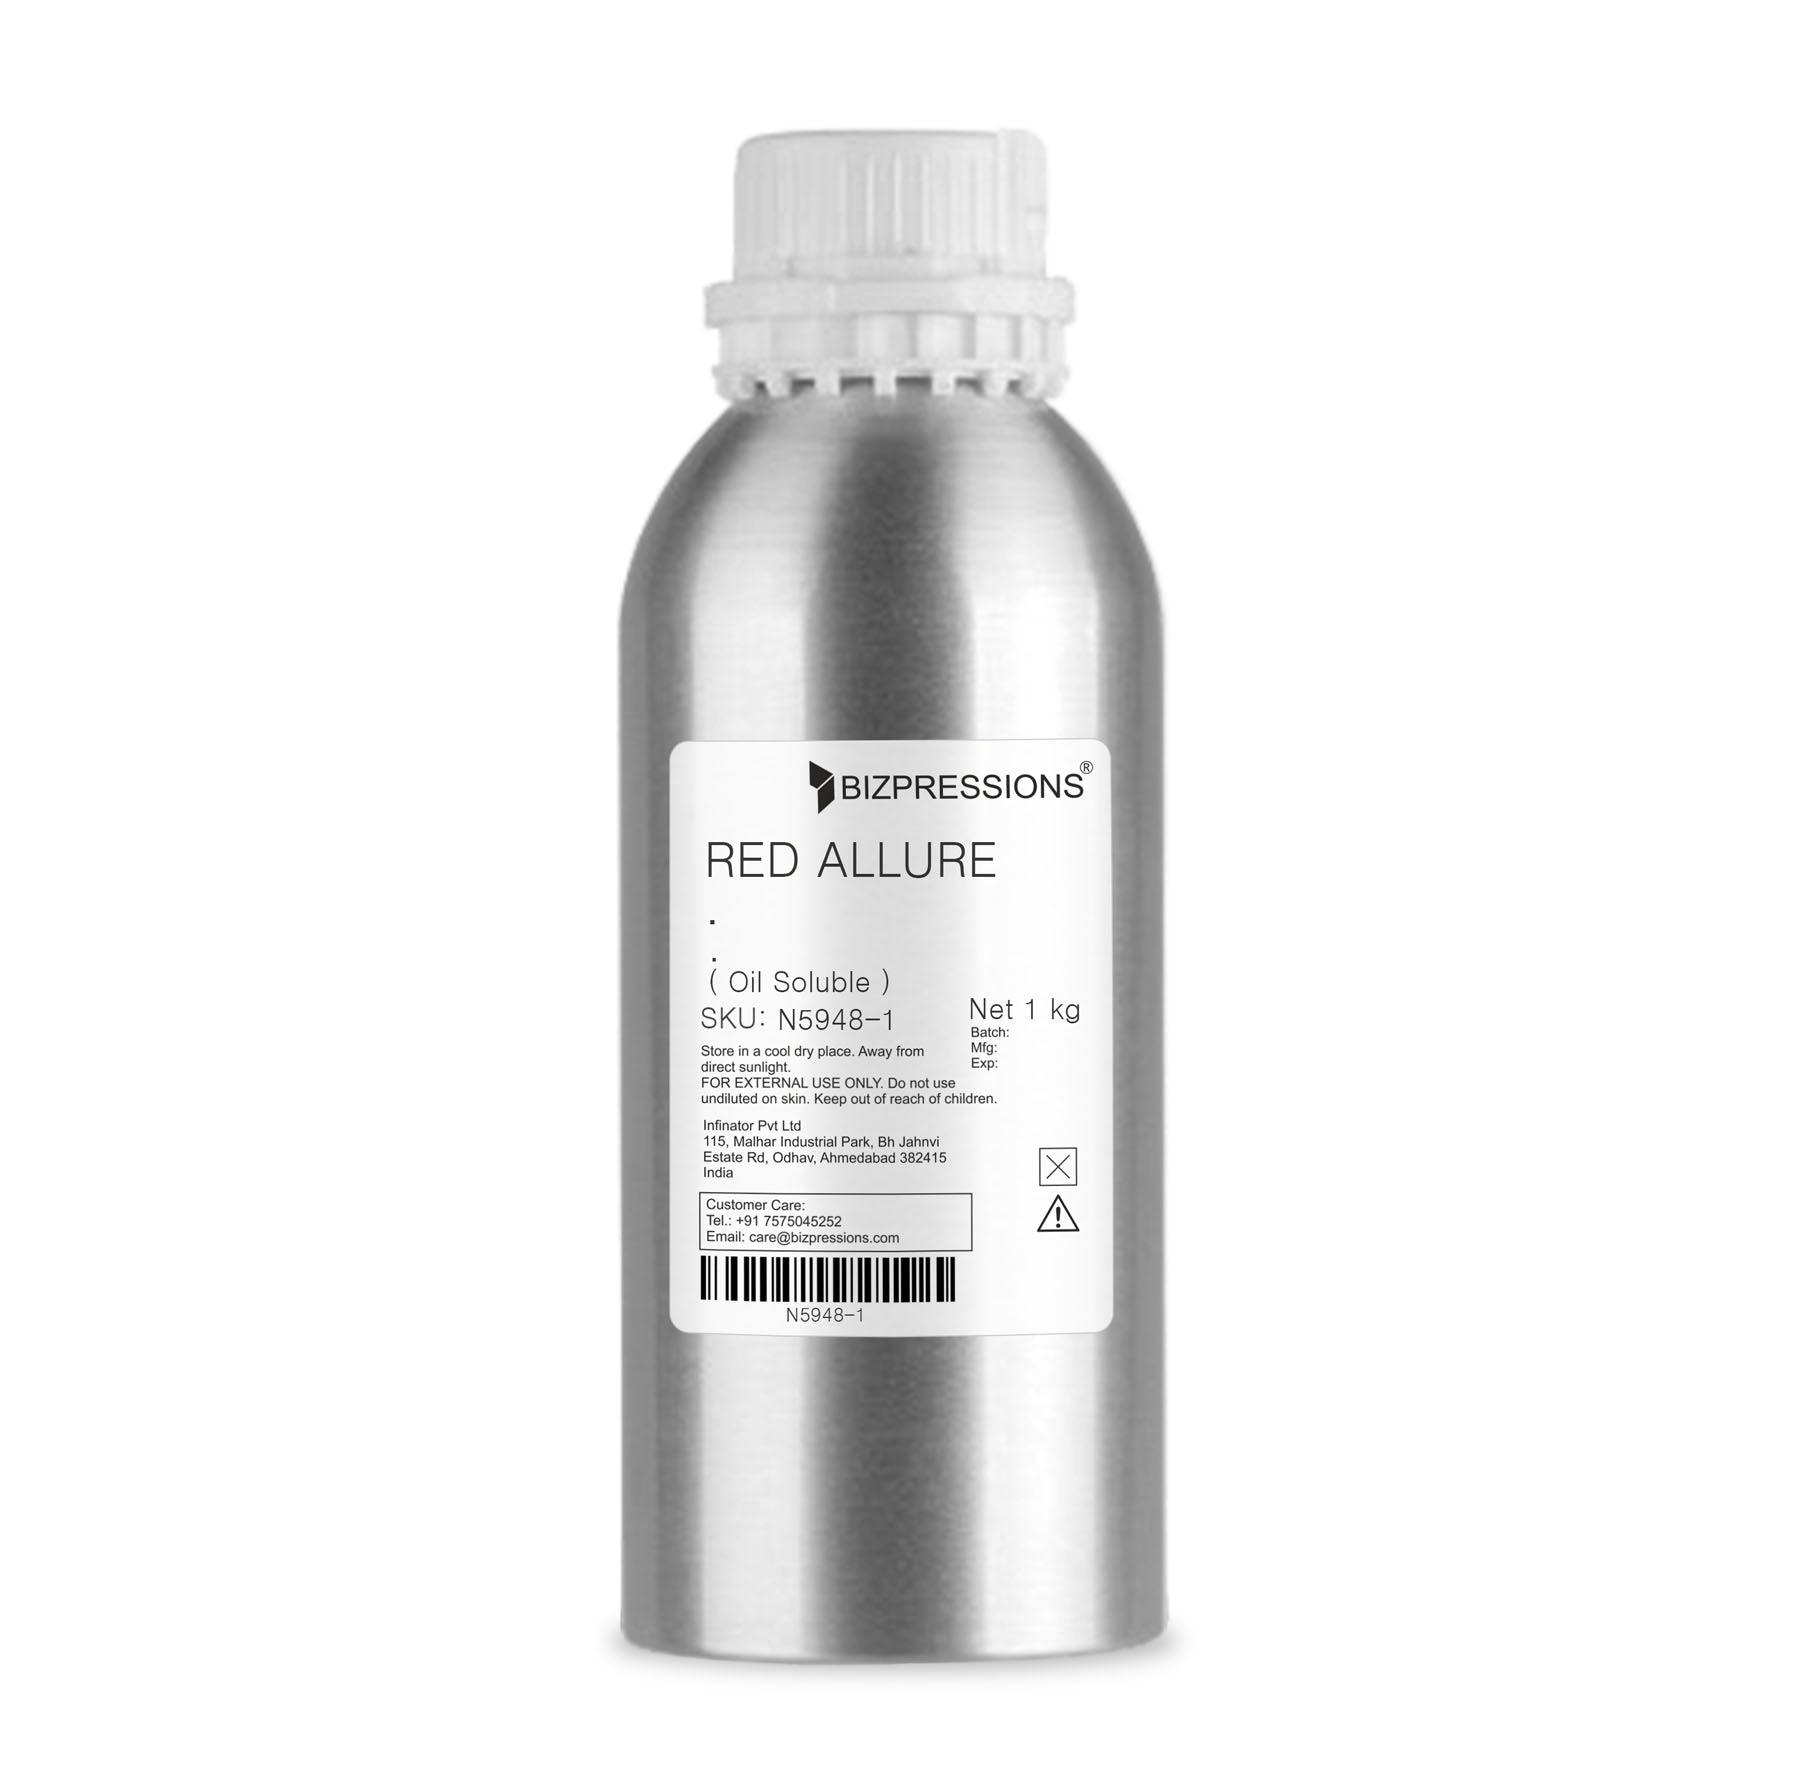 RED ALLURE - Fragrance ( Oil Soluble ) - 1 kg